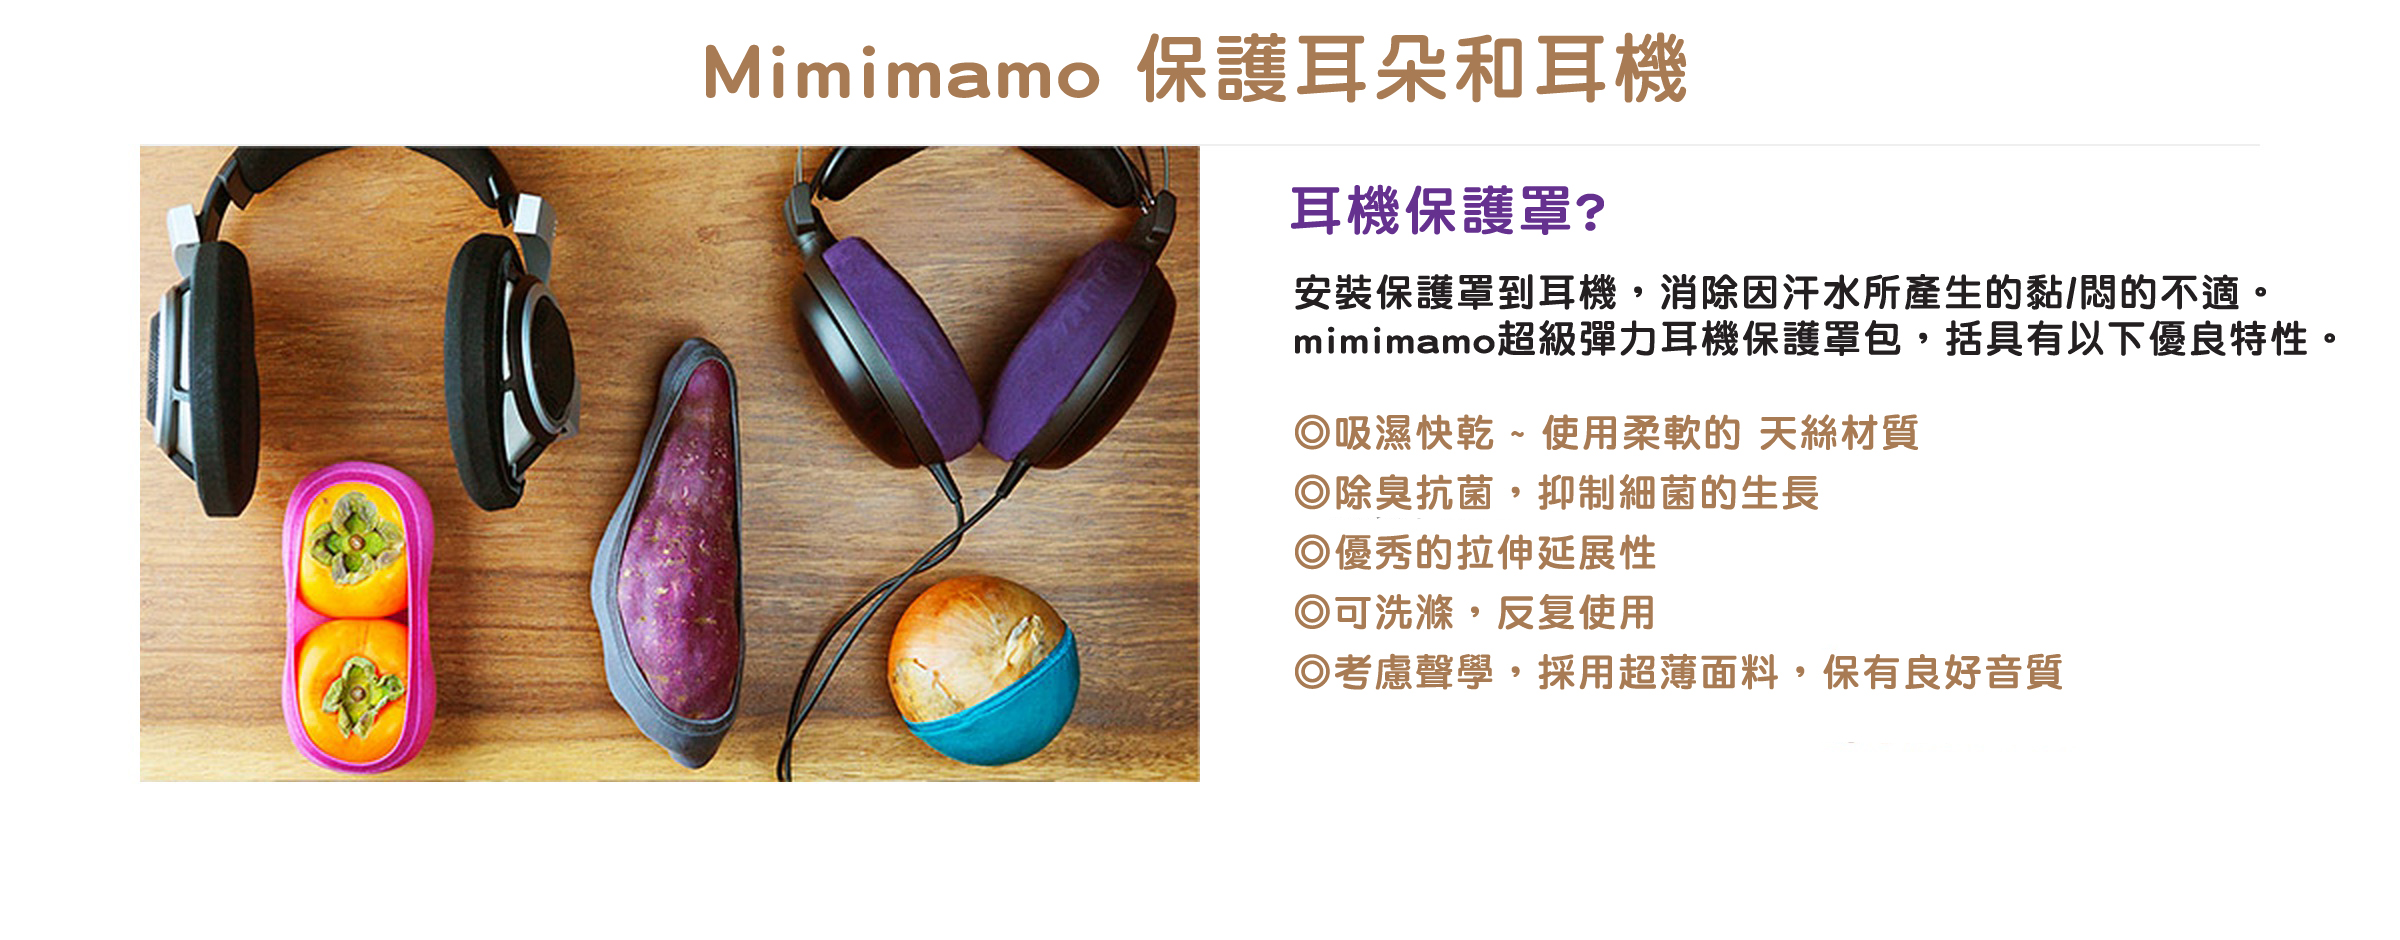 mimimamo-2 copy